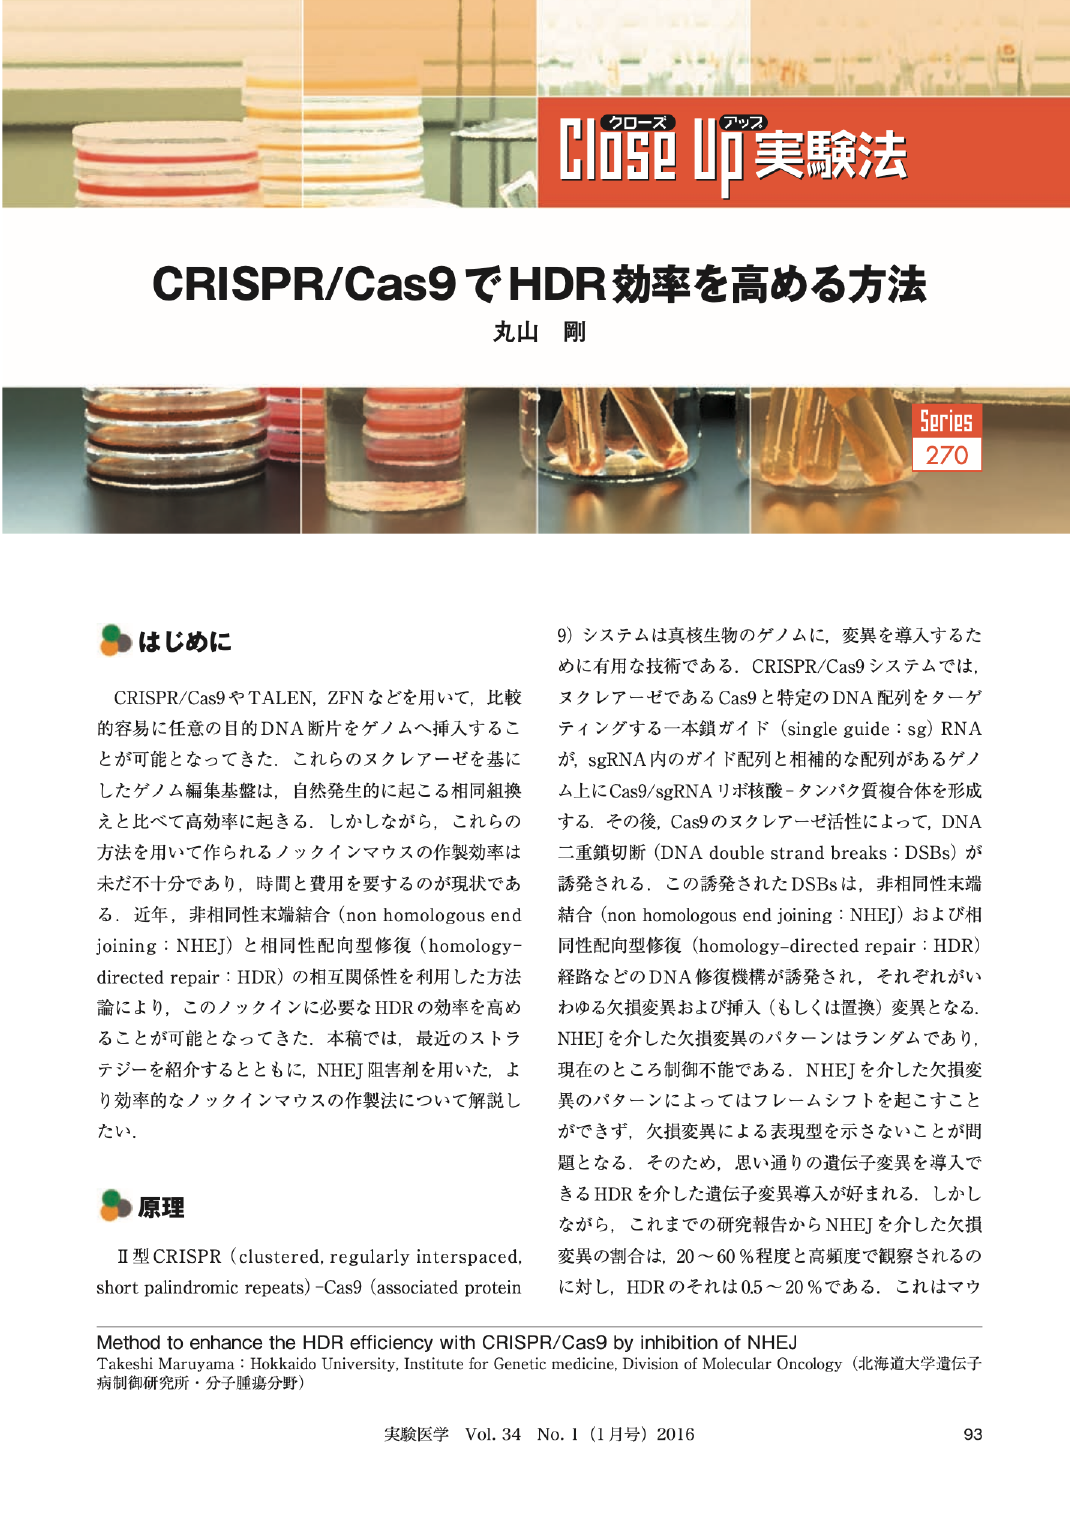 CRISPR/Cas9でHDR効率を高める方法